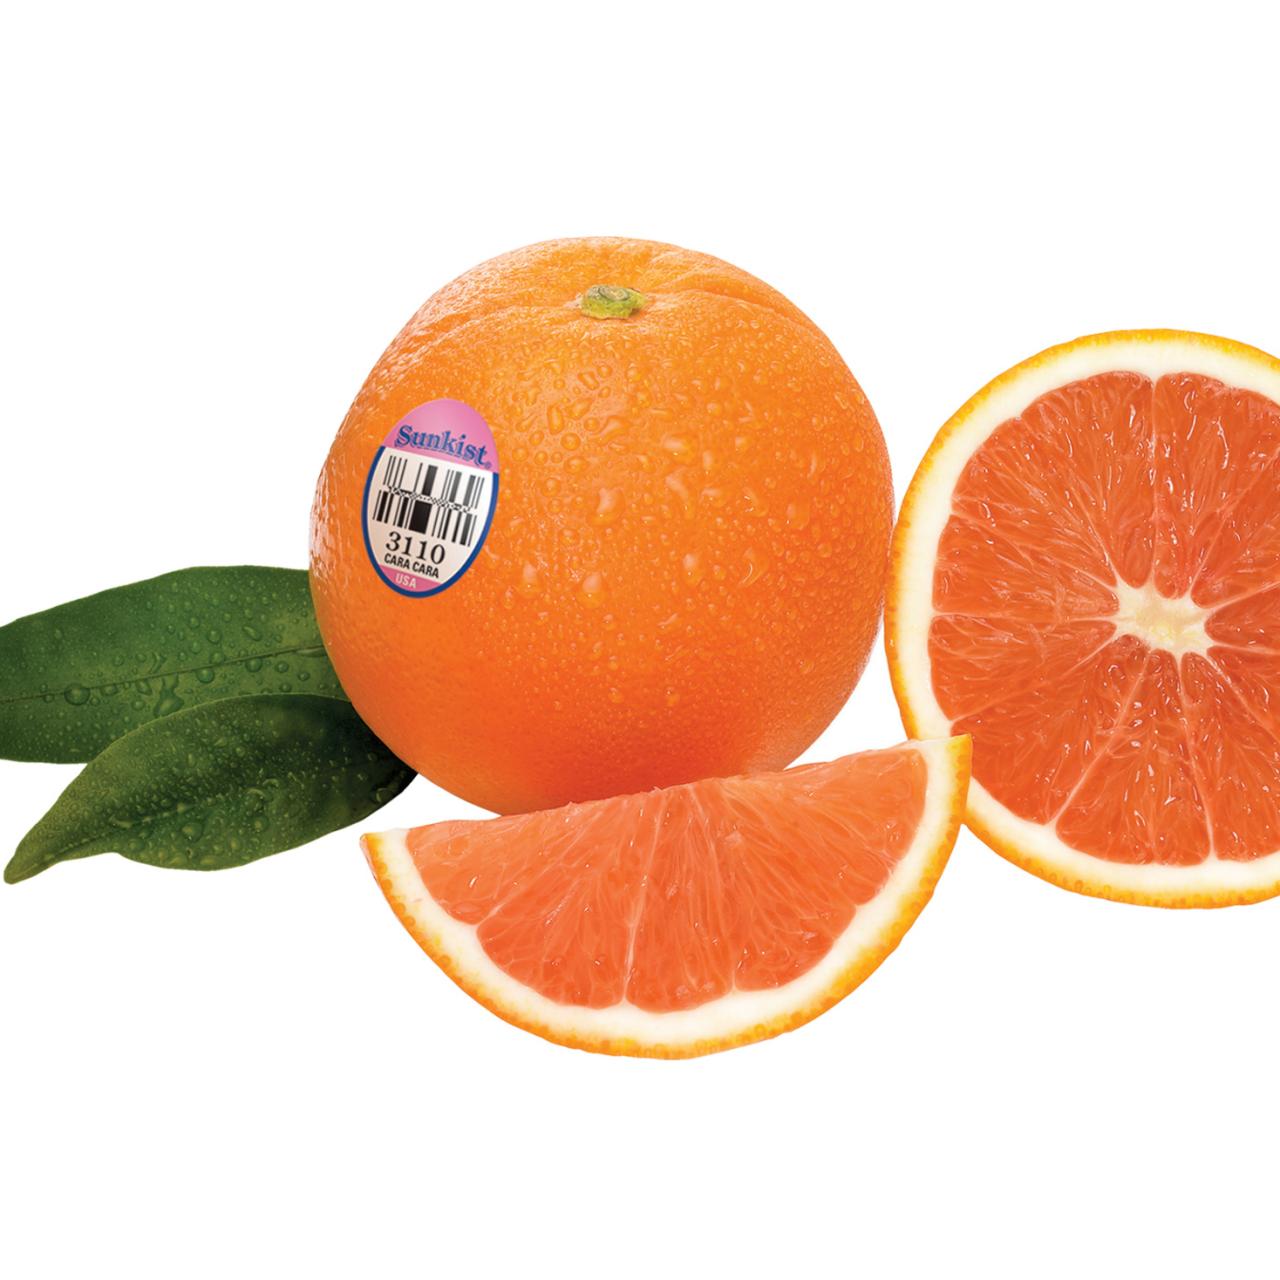 orange: calories and nutritional composition